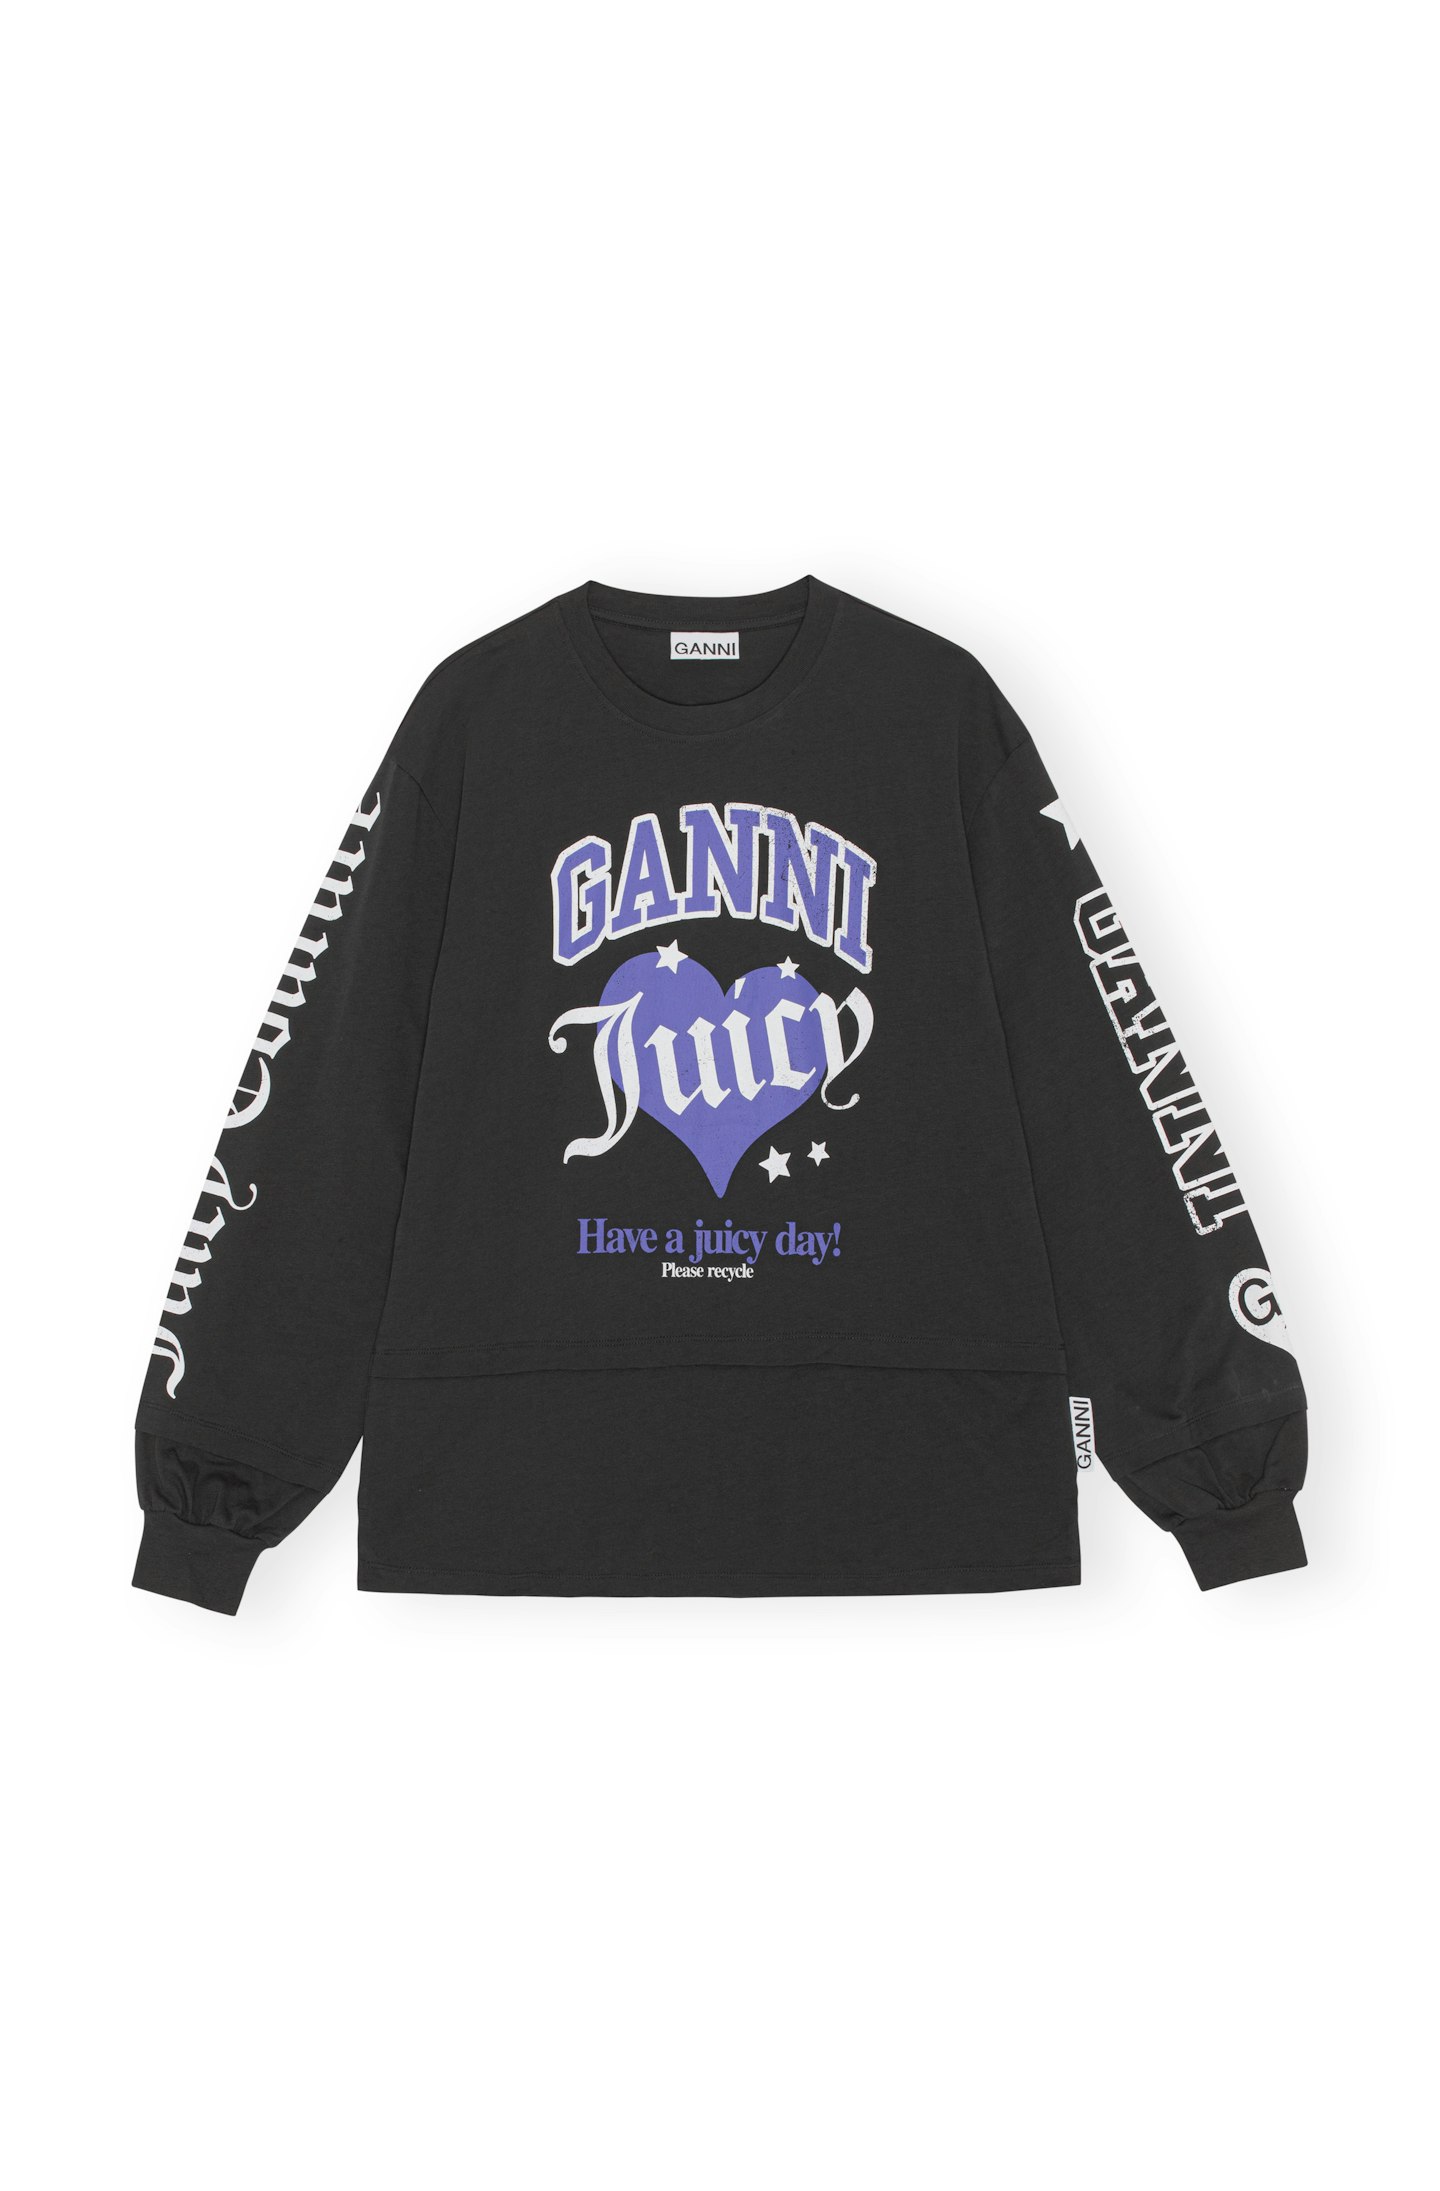 GANNI x Juicy Couture GANNI x Juicy Layered T-shirt Cotton Jersey, £125